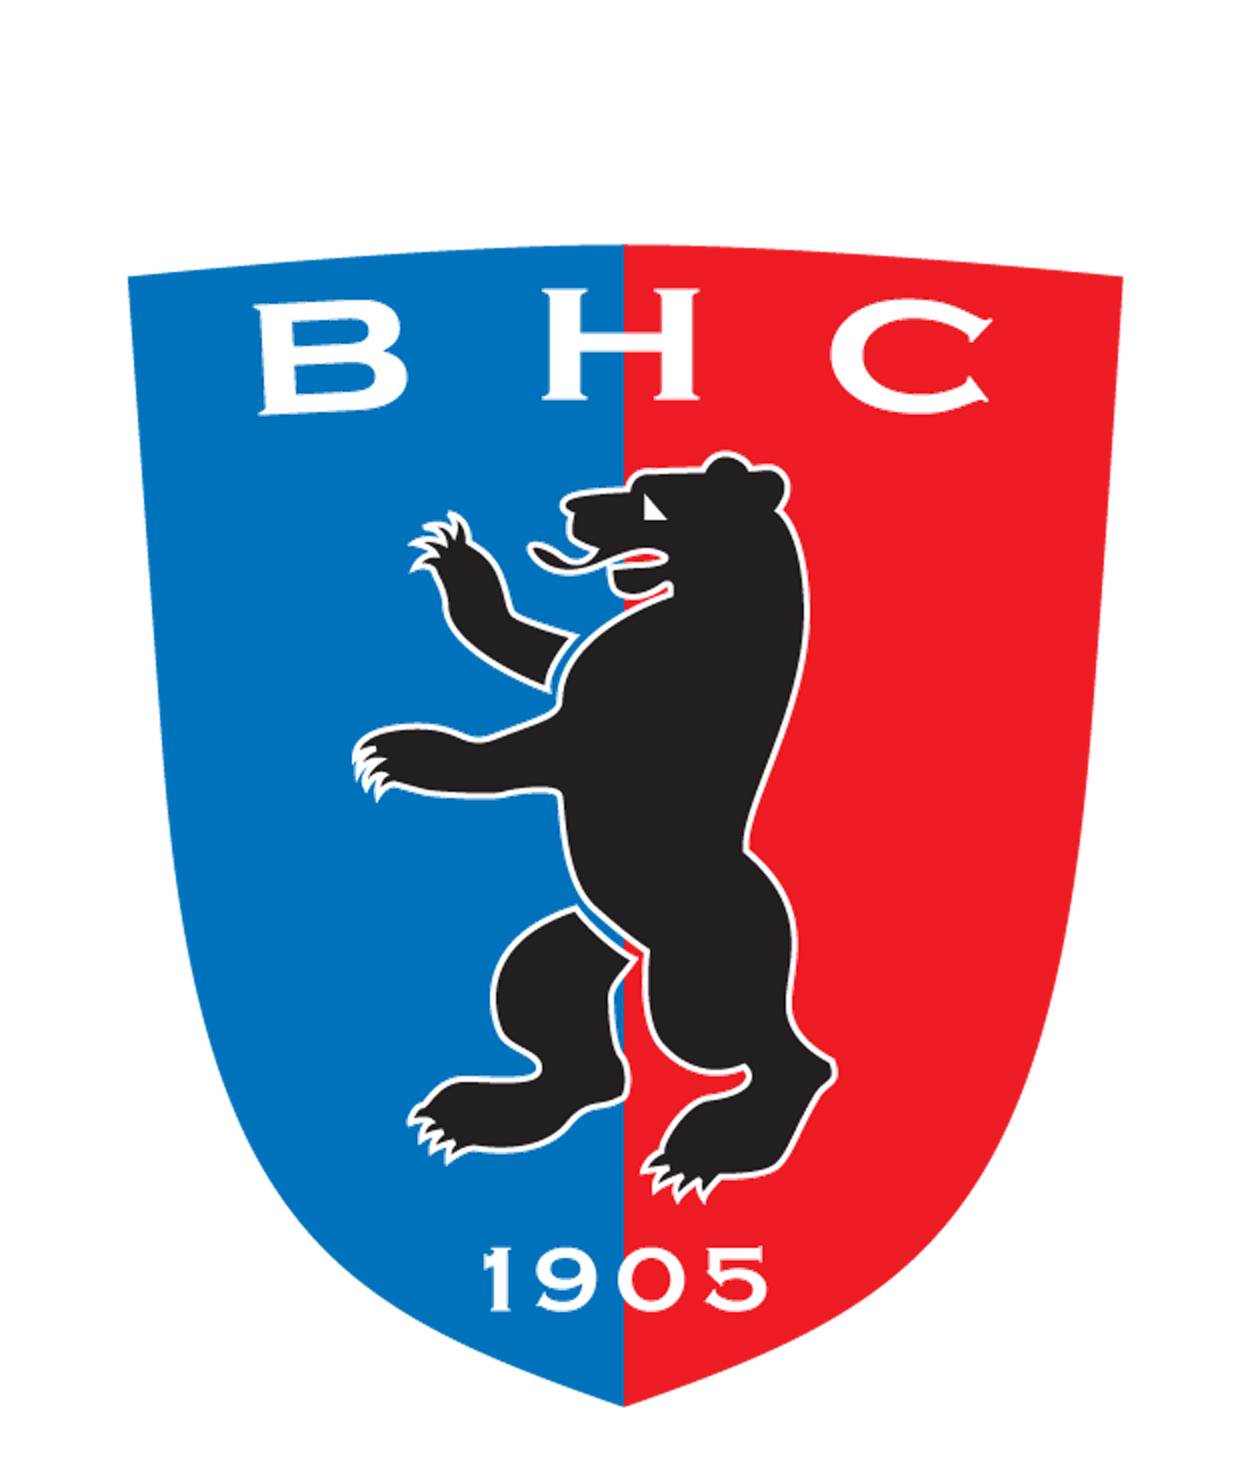 BHC-Damen gewinnen Europapokal (update)